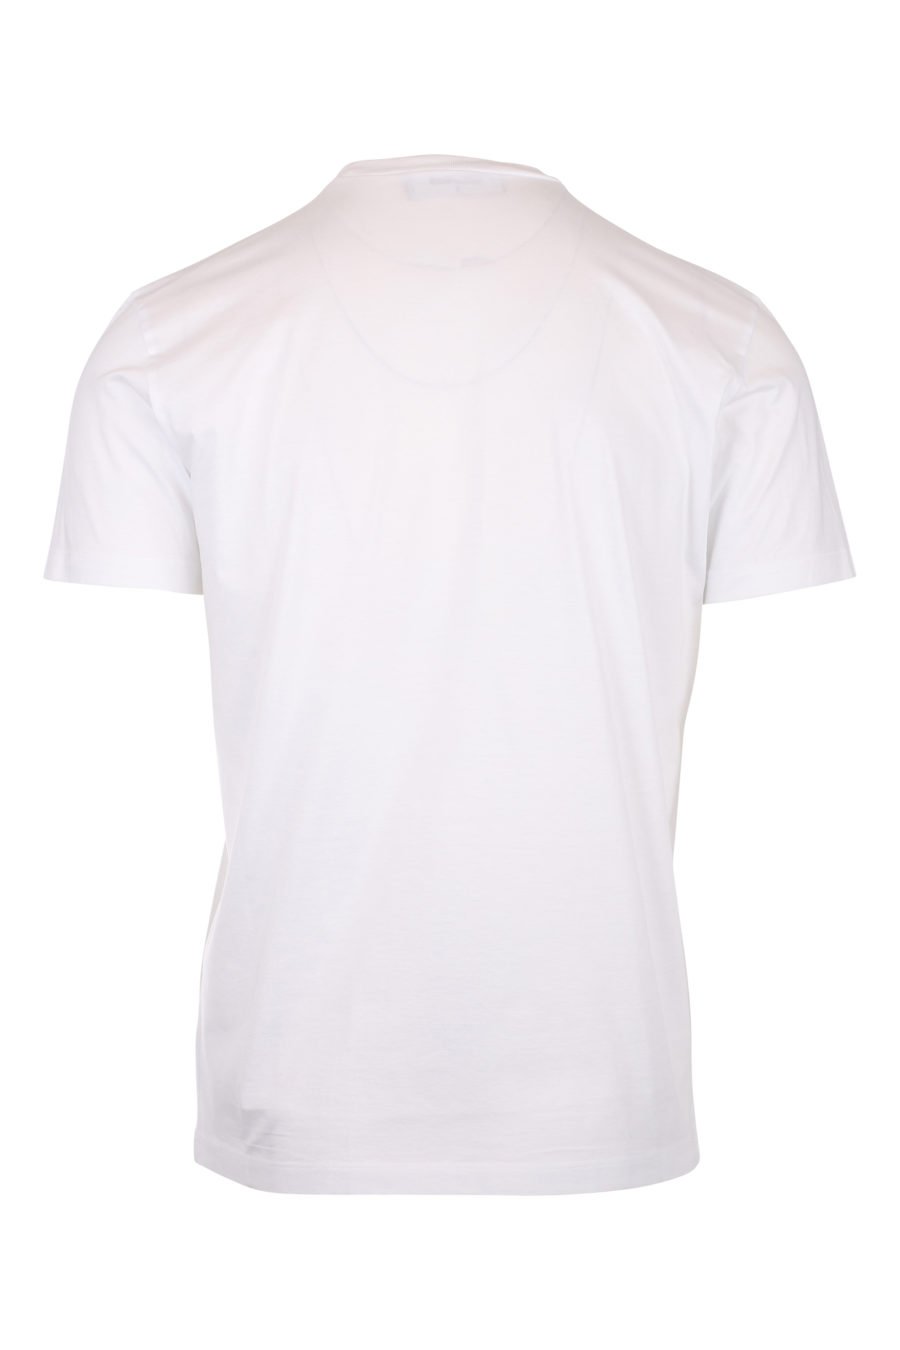 T-shirt blanc avec petit logo ceresio 9 - IMG 9778 1